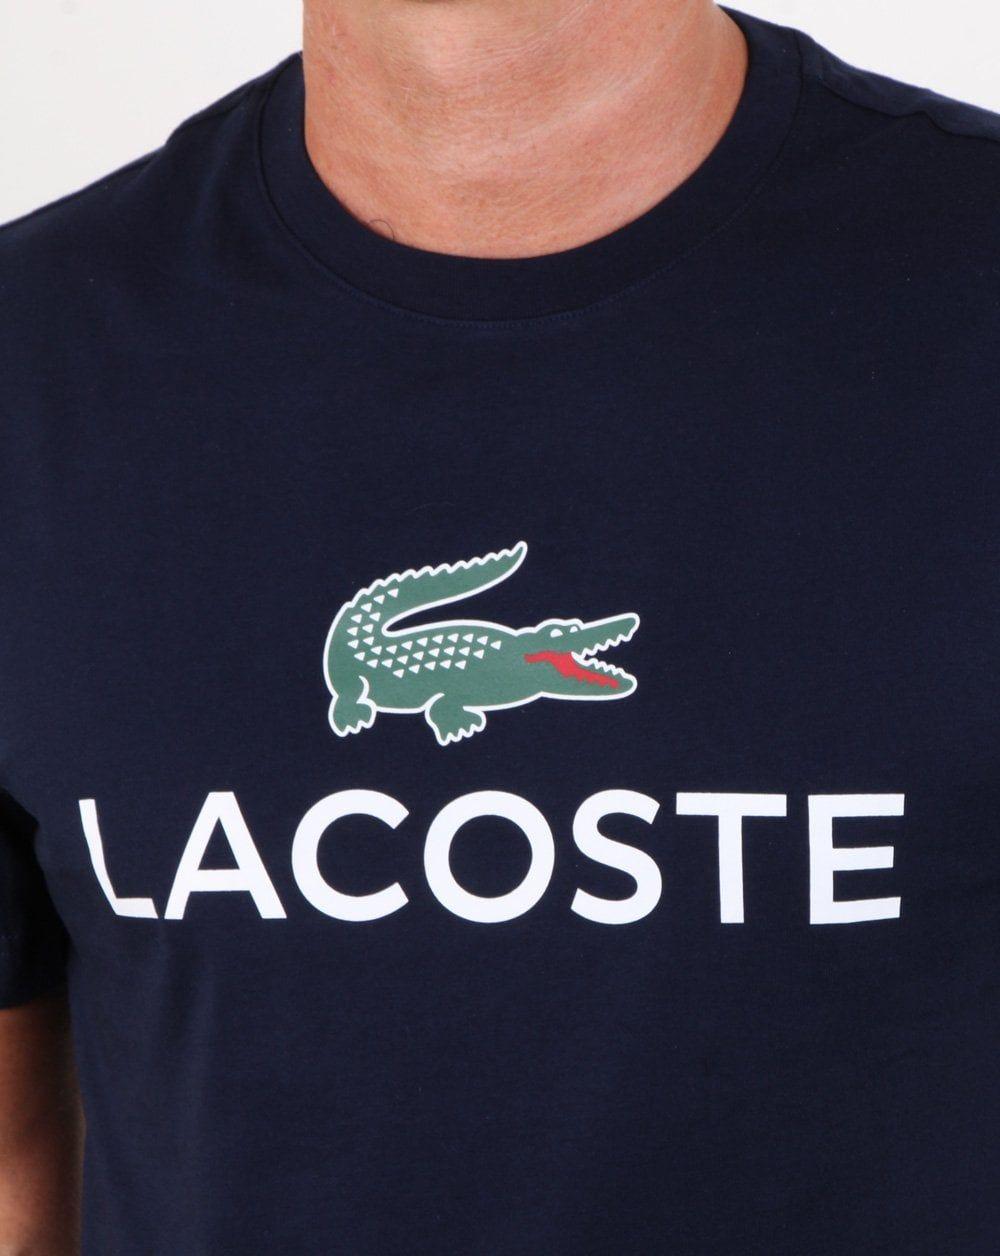 Lacoste Shirt Logo - Lacoste Logo T-shirt Navy, Mens, Tee, Navy, Croc, Smart, Cotton, Crew